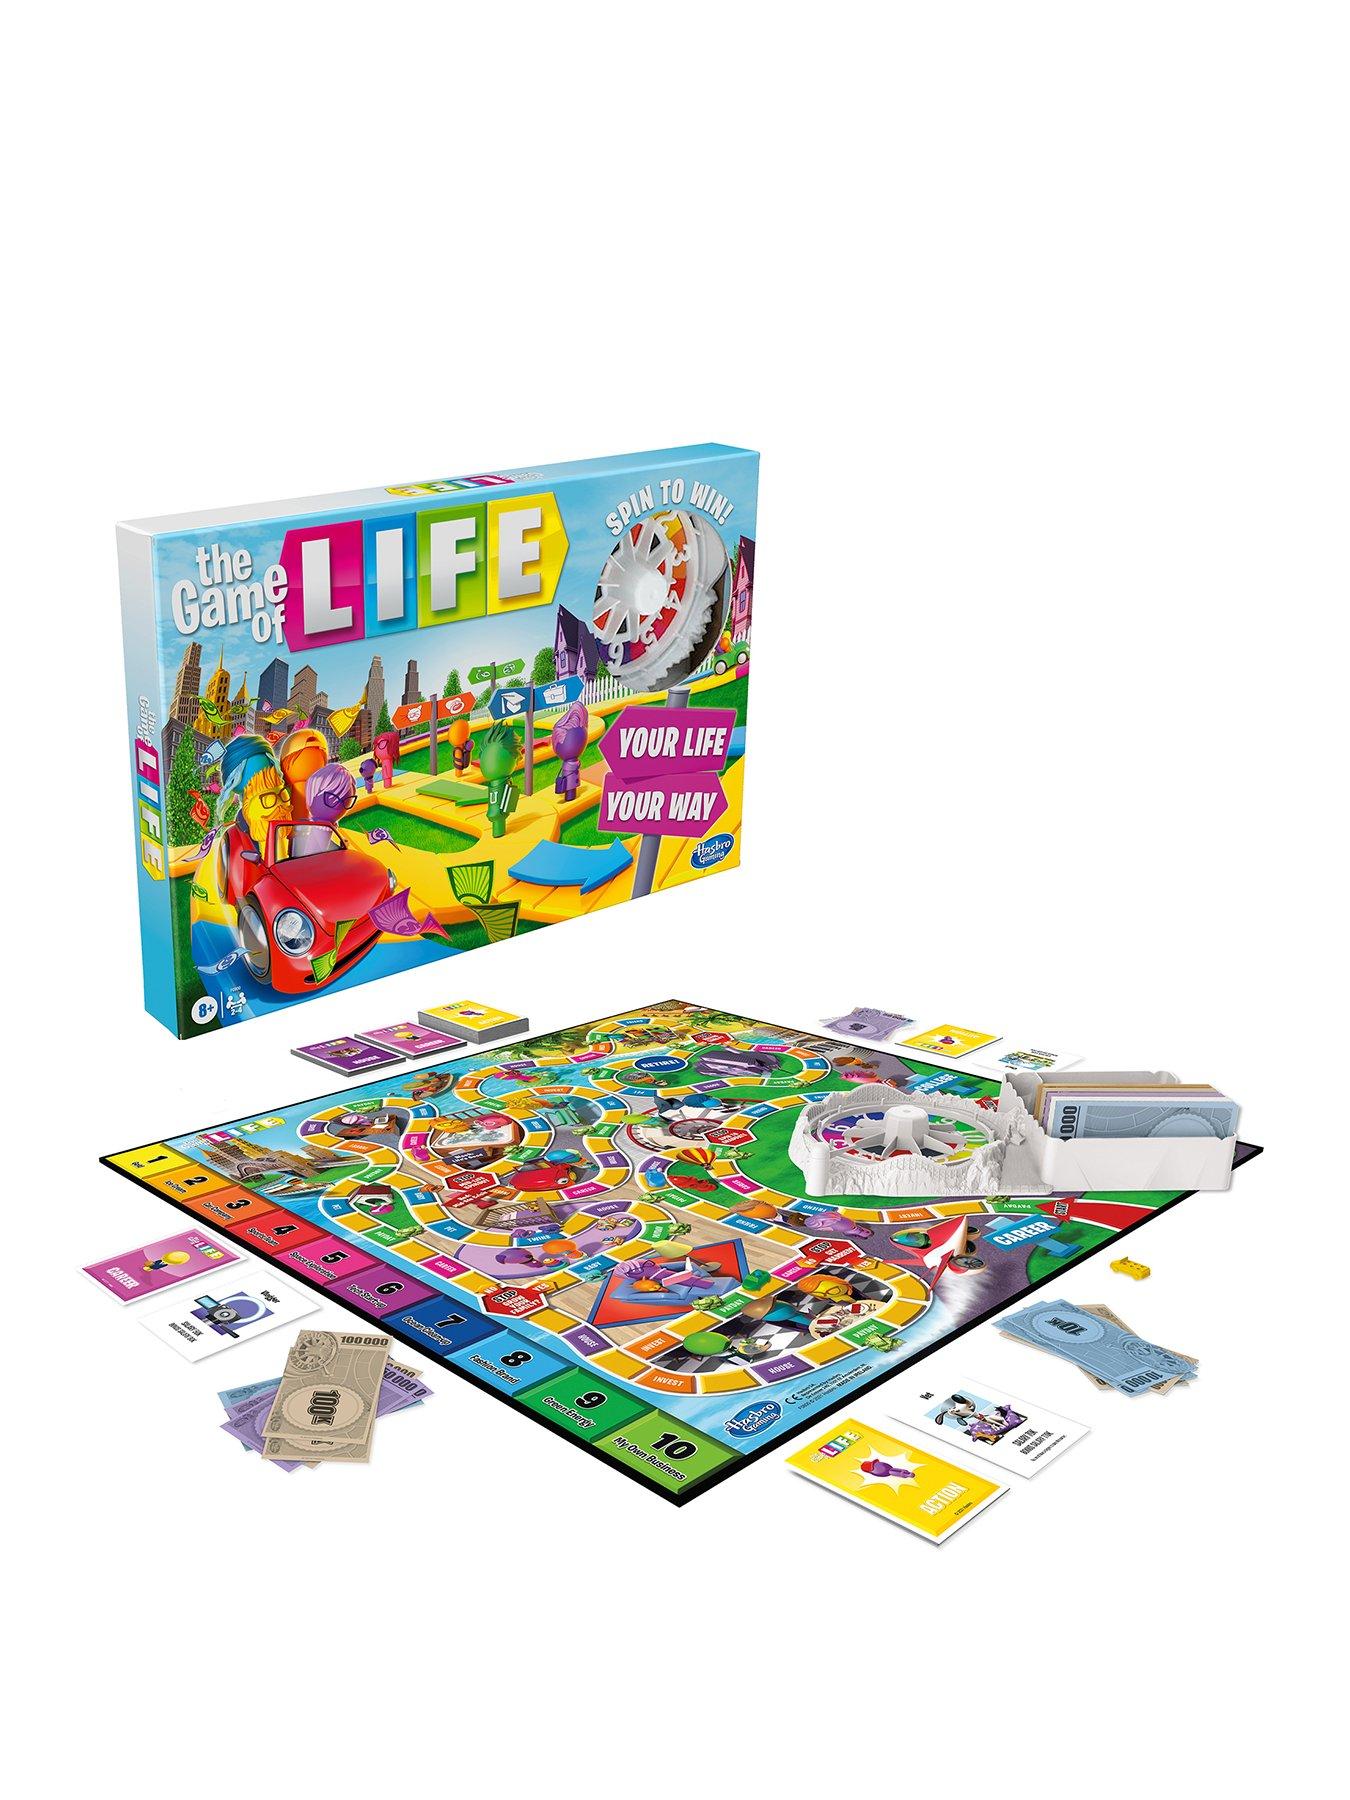 Hasbro Board Game, The Game of Life